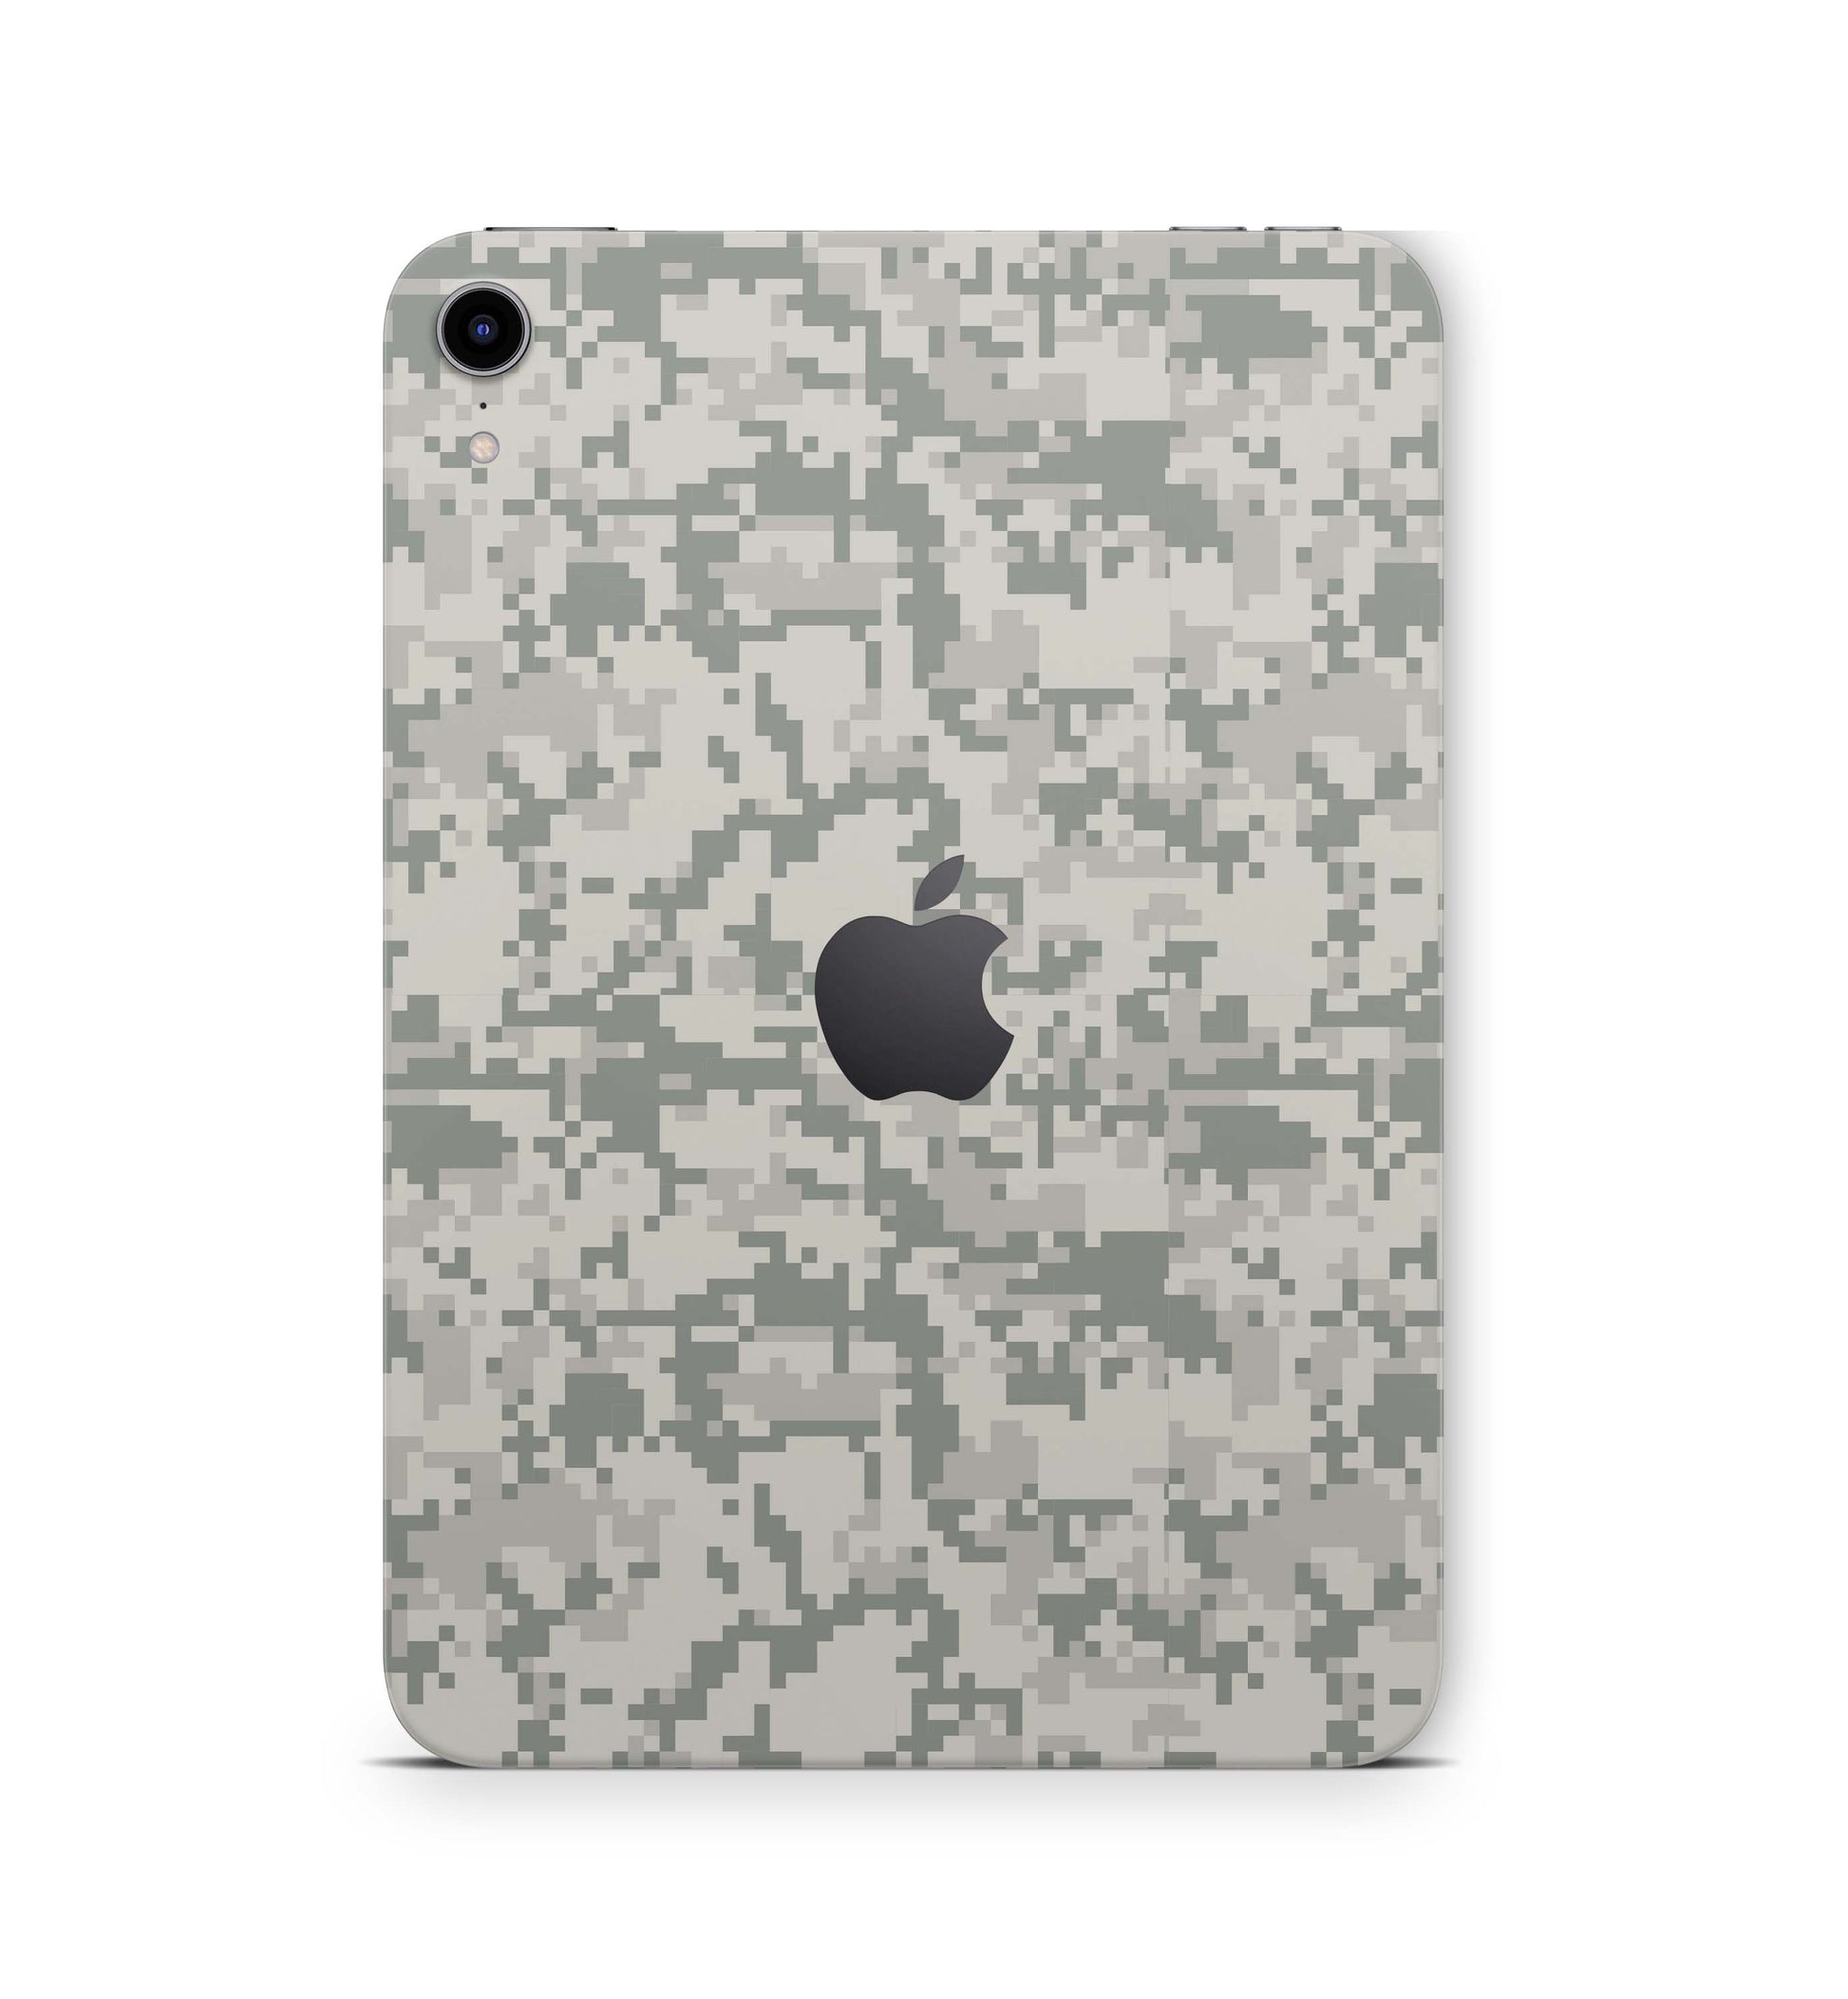 iPad Air Skin Design Cover Folie Vinyl Skins & Wraps für alle iPad Air Modelle Aufkleber Skins4u Acu-Camo  